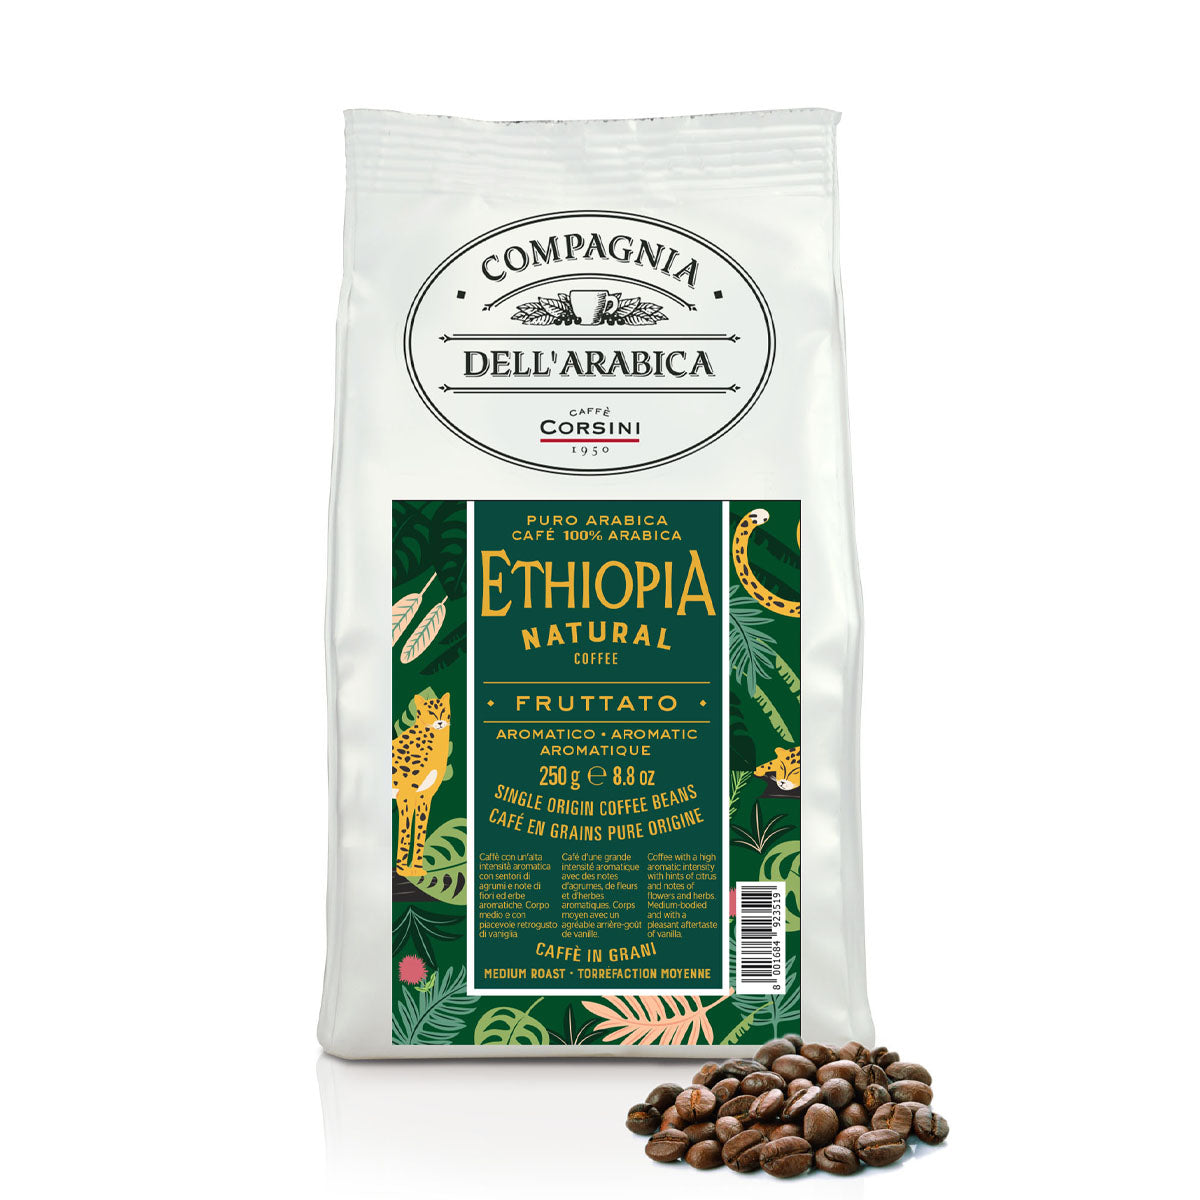 Coffee beans | Ethiopia Natural Coffee | 100% Arabica | 250g | Box of 12 packs